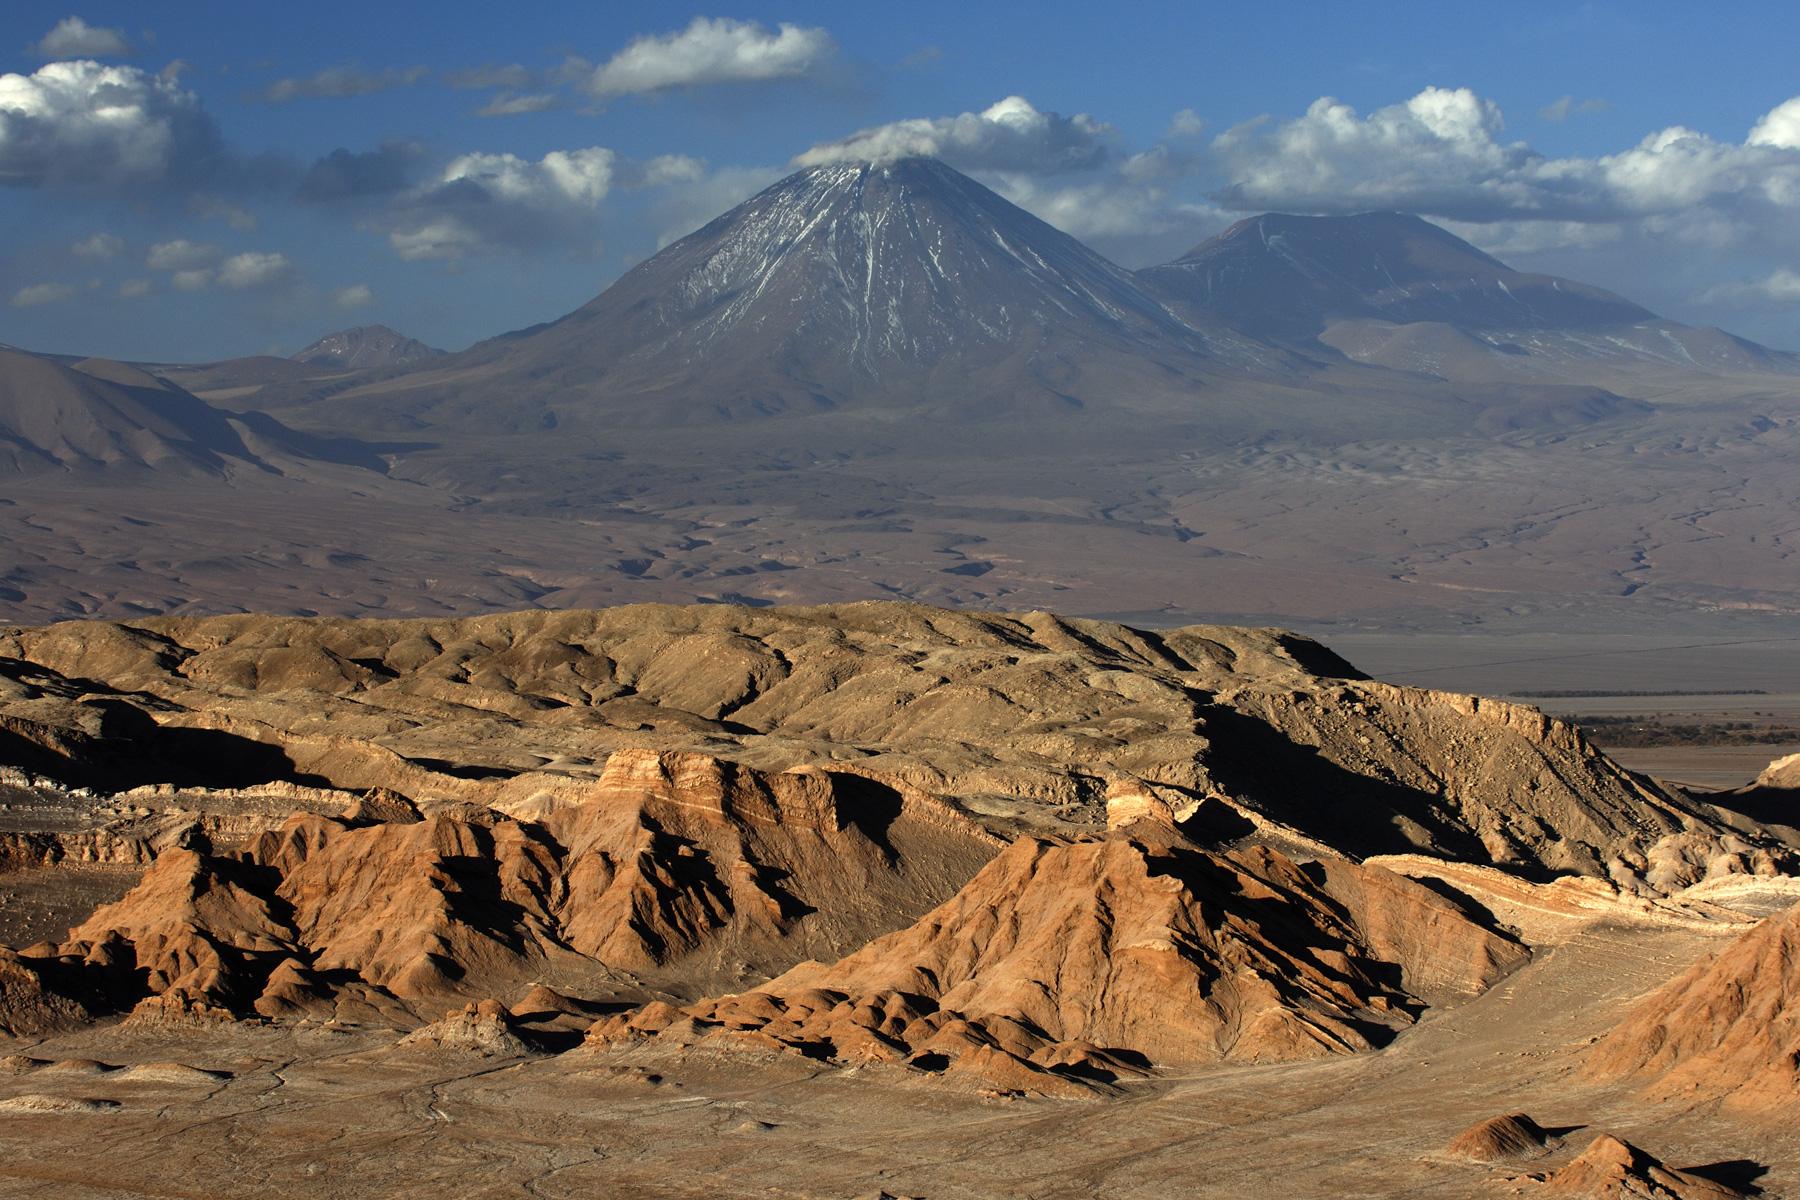 Chili. Désert d'Atacama.Valle de la Luna et volcan Licancabur en fond, près de San Pedro de Atacama.